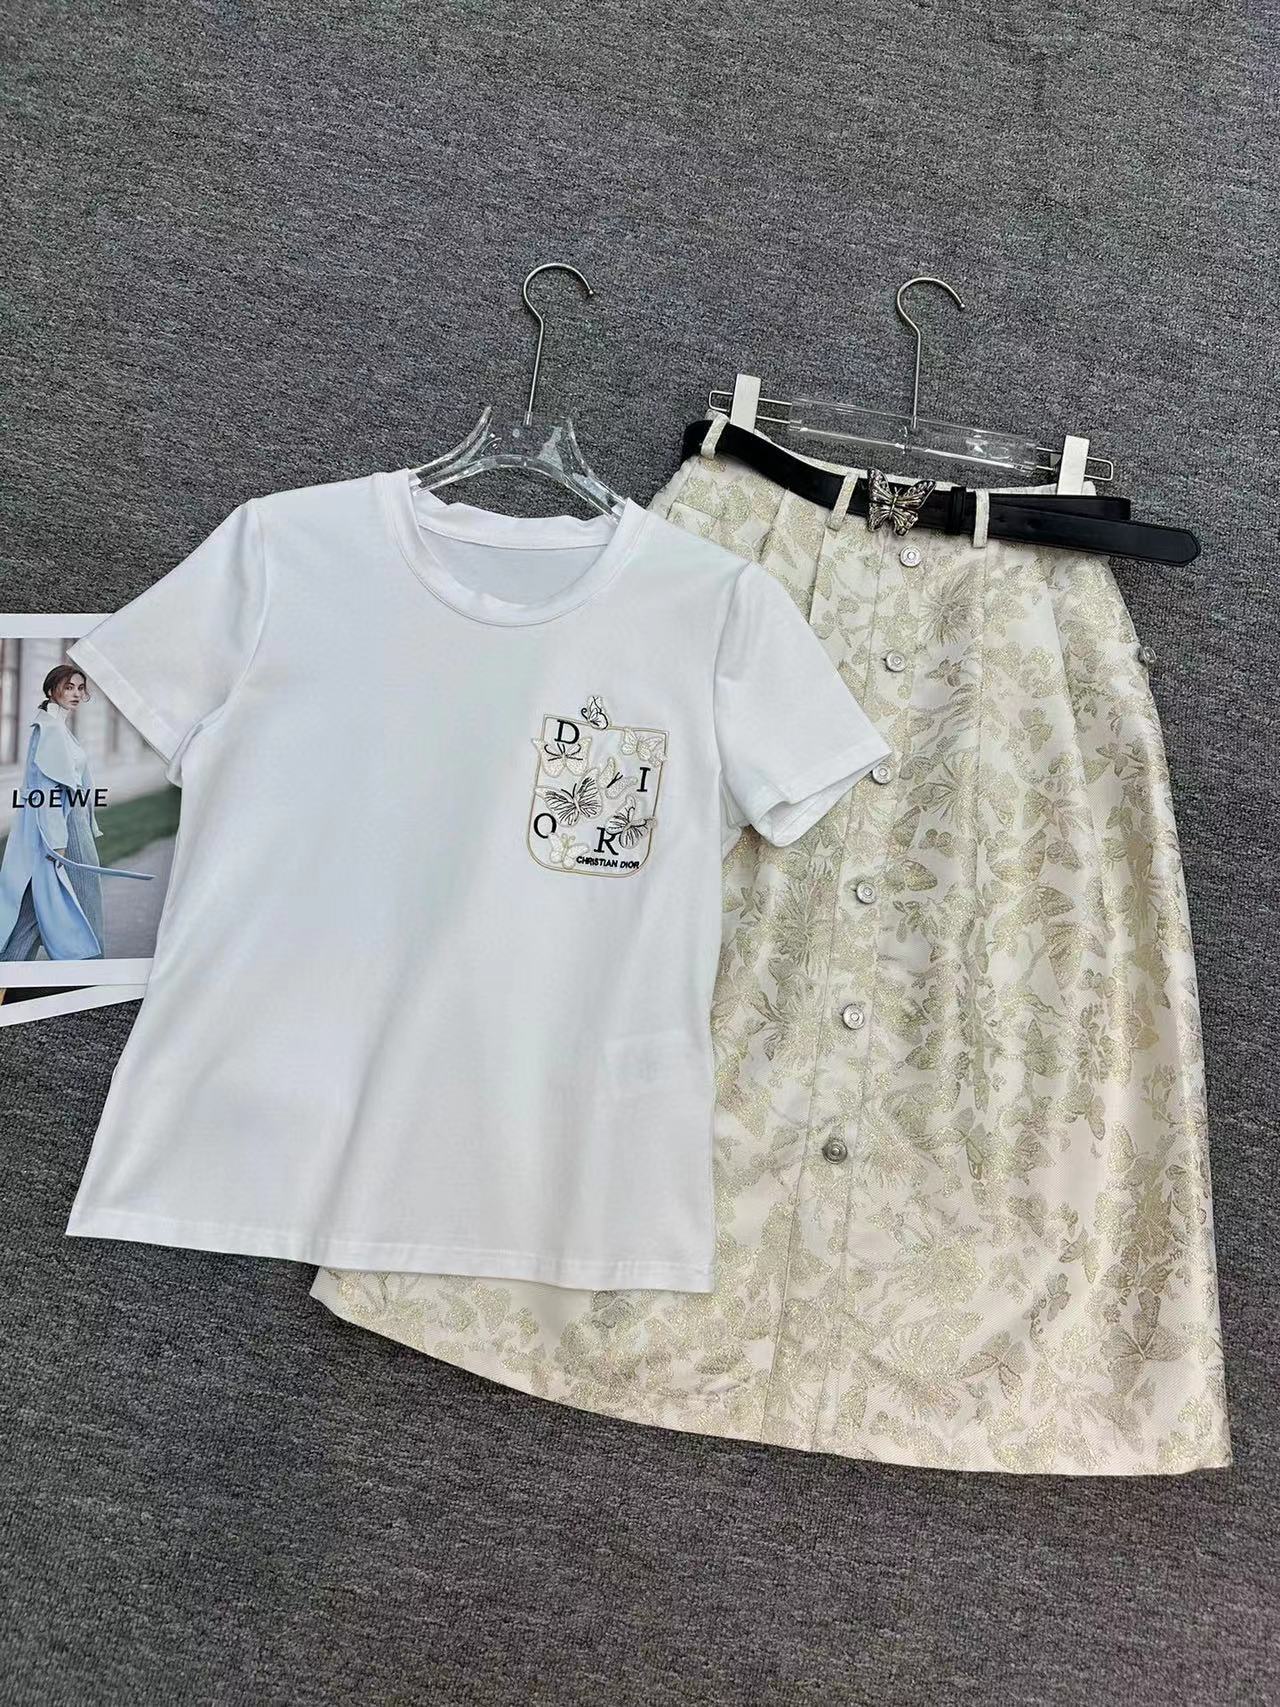 DI0R刺繍Tシャツ+スカート2点セット【 50％割引+送料無料】